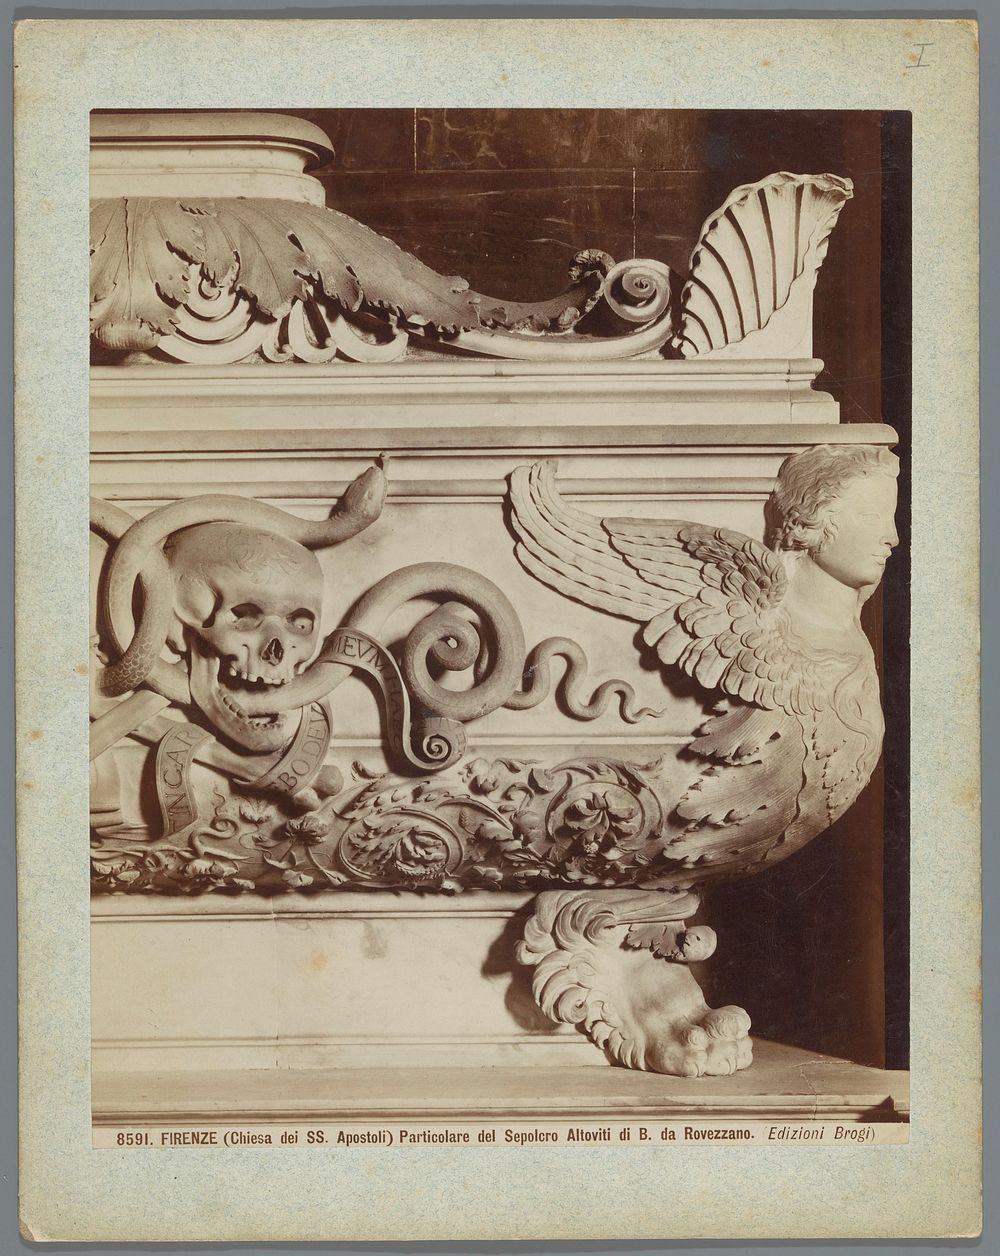 Deel van de tombe van Alfonso Altoviti in de Santi Apostoli te Florence (c. 1875 - c. 1900) by Edizione Brogi